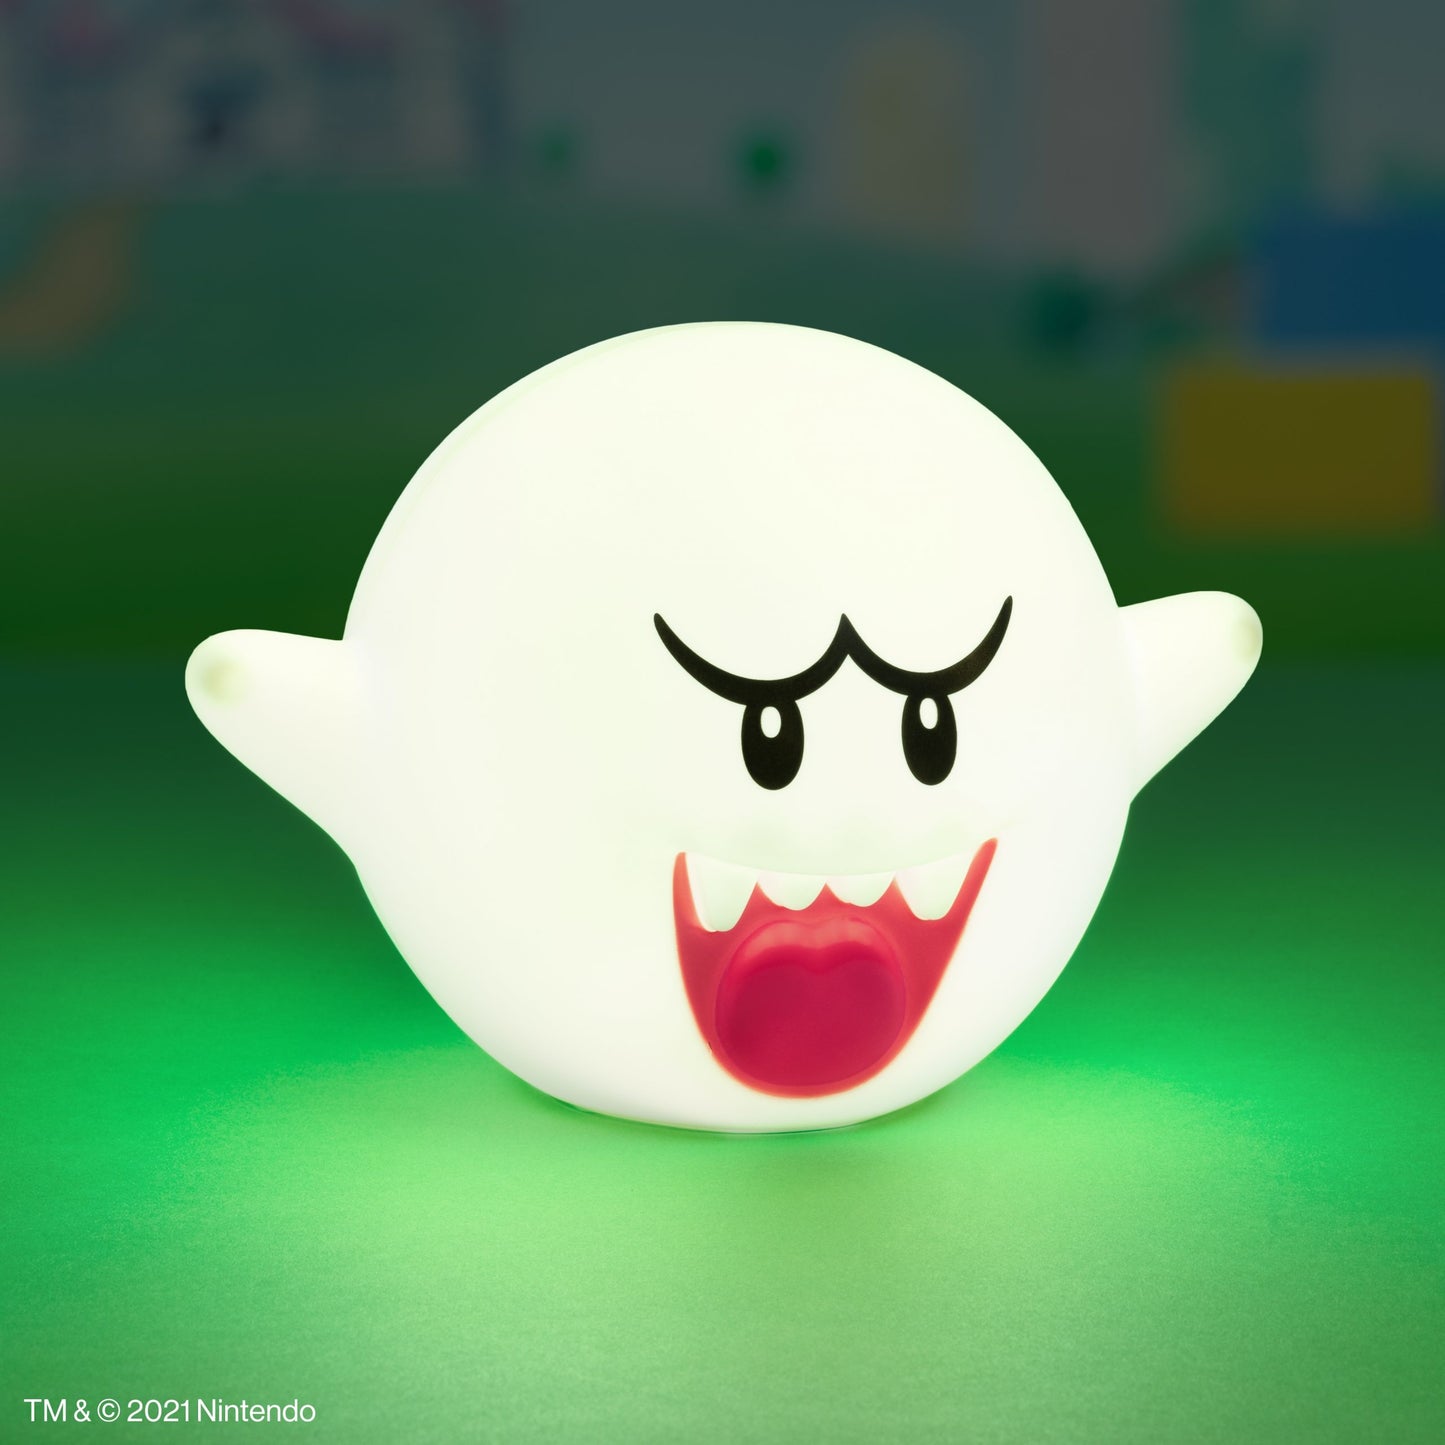 Lampen - Super Mario - Boo